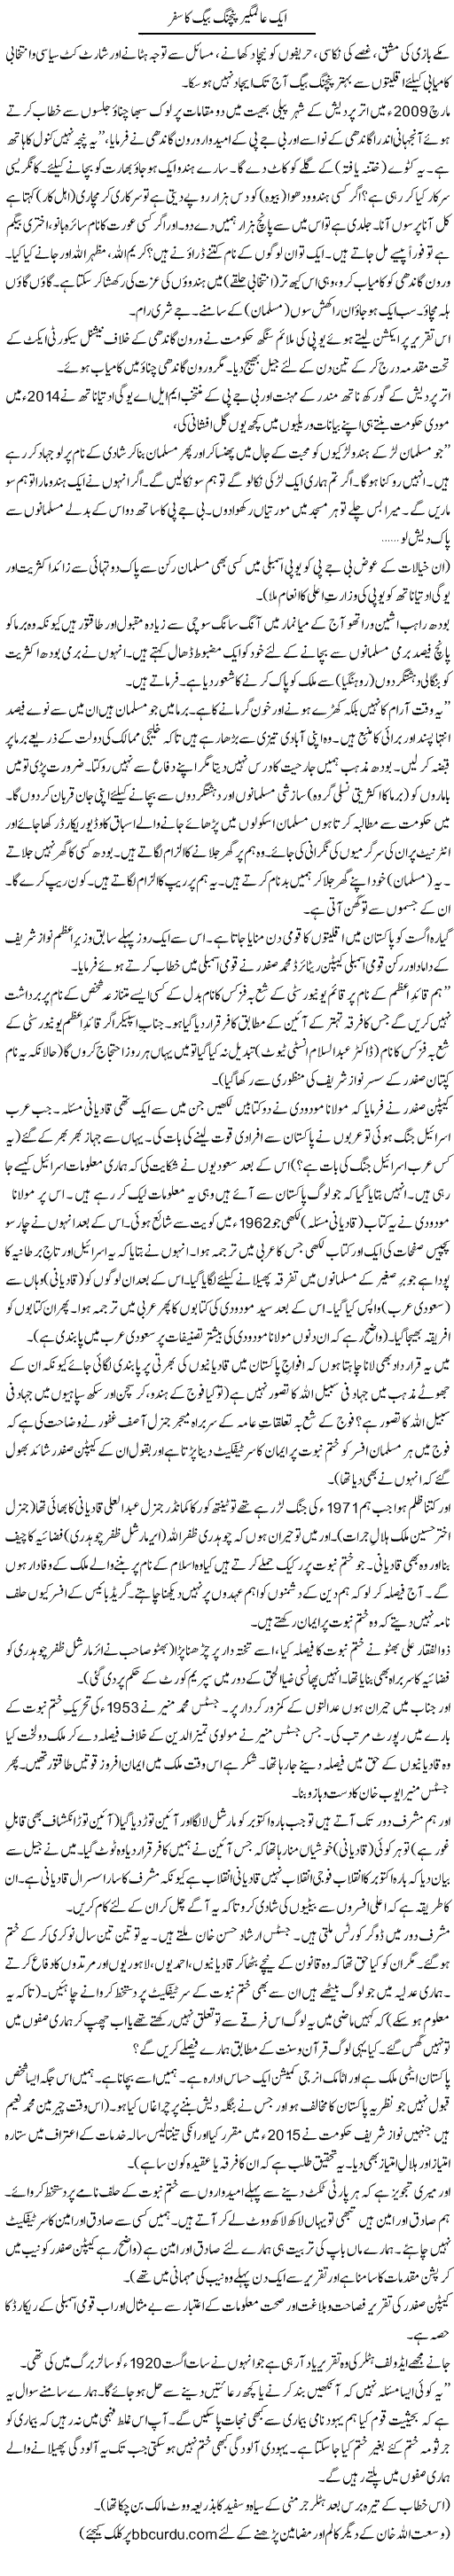 Aik Alamgir Punching Bag Ka Safar | Wusat Ullah Khan | Daily Urdu Columns